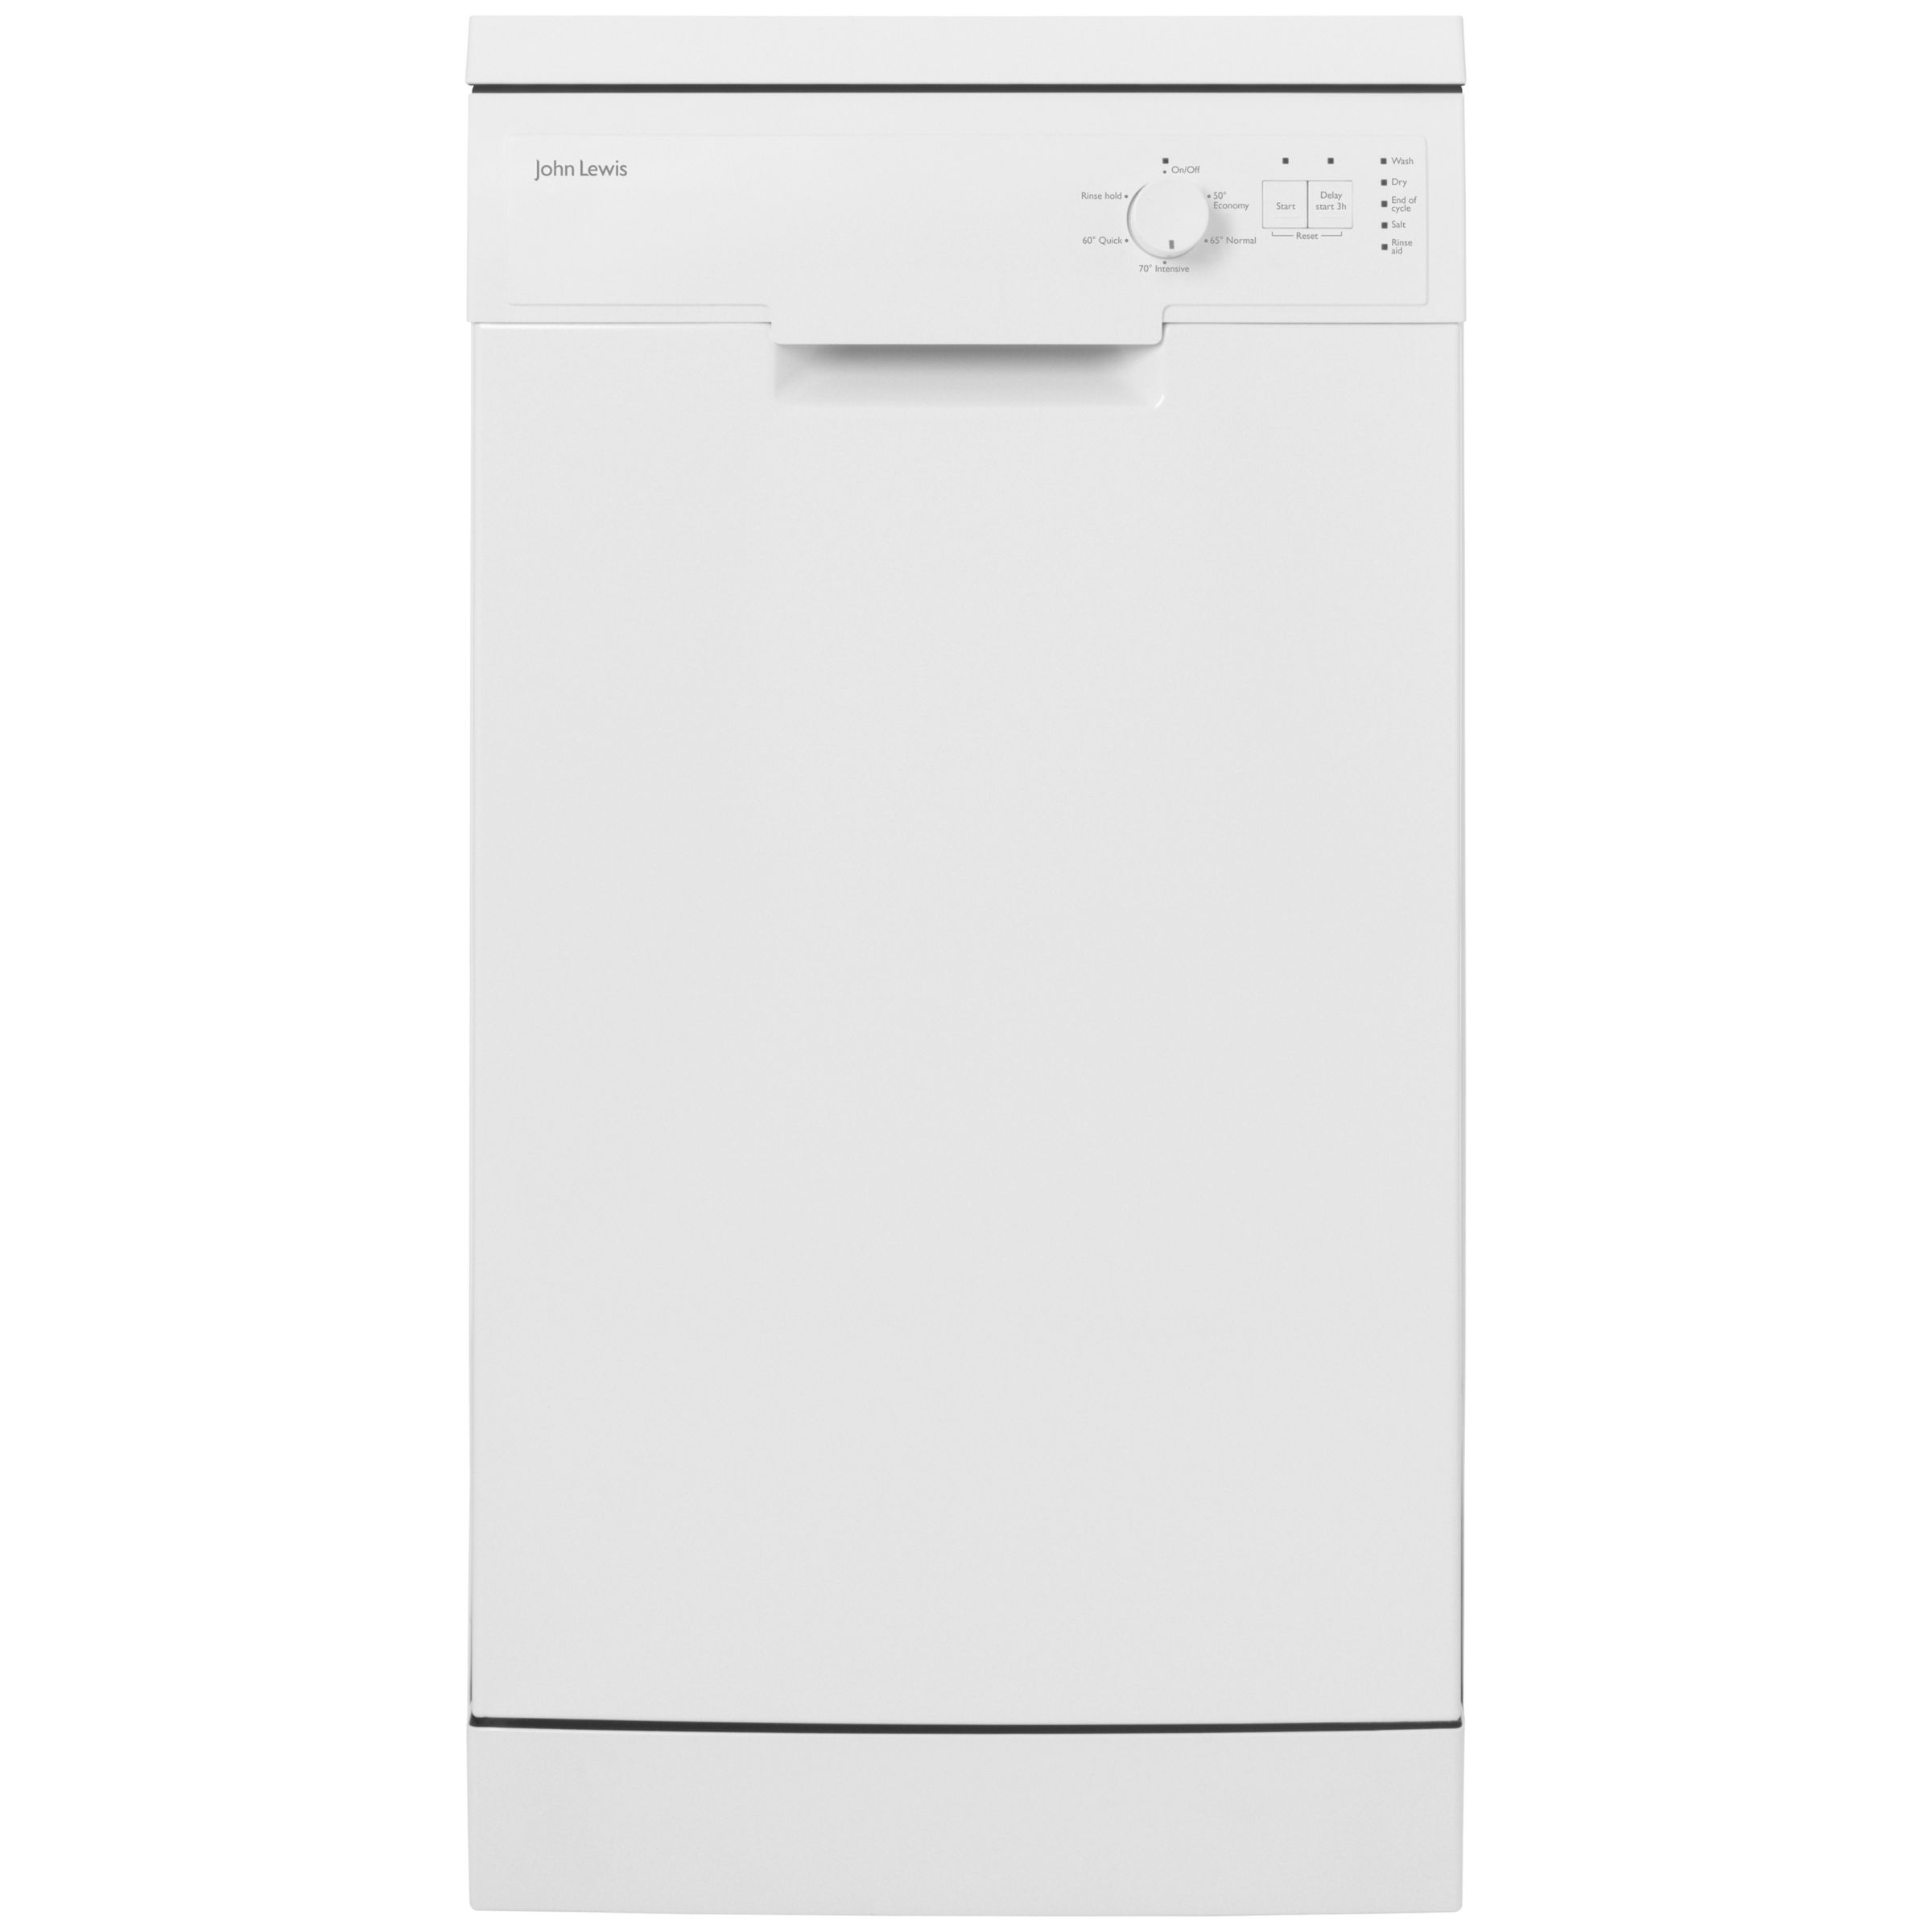 John Lewis JLDWW908 Slimline Freestanding Dishwasher in White